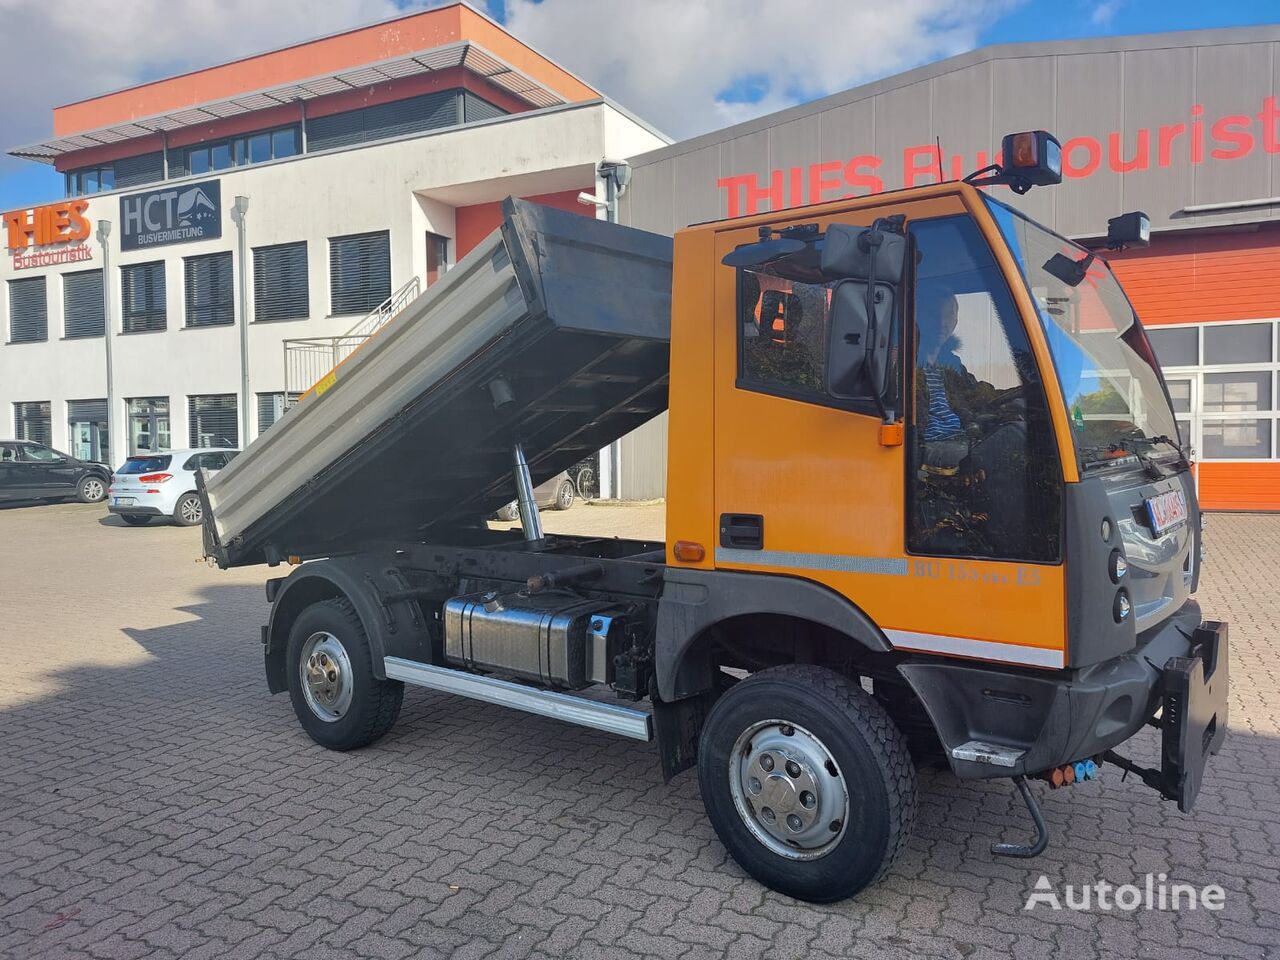 https://autoline.com/img/s/commercial-vehicle-dump-truck-3-5t-Bucher-Unimog-Bucher-Multicar-BU1554---1669283527889059669_big--22112211243661734300.jpg